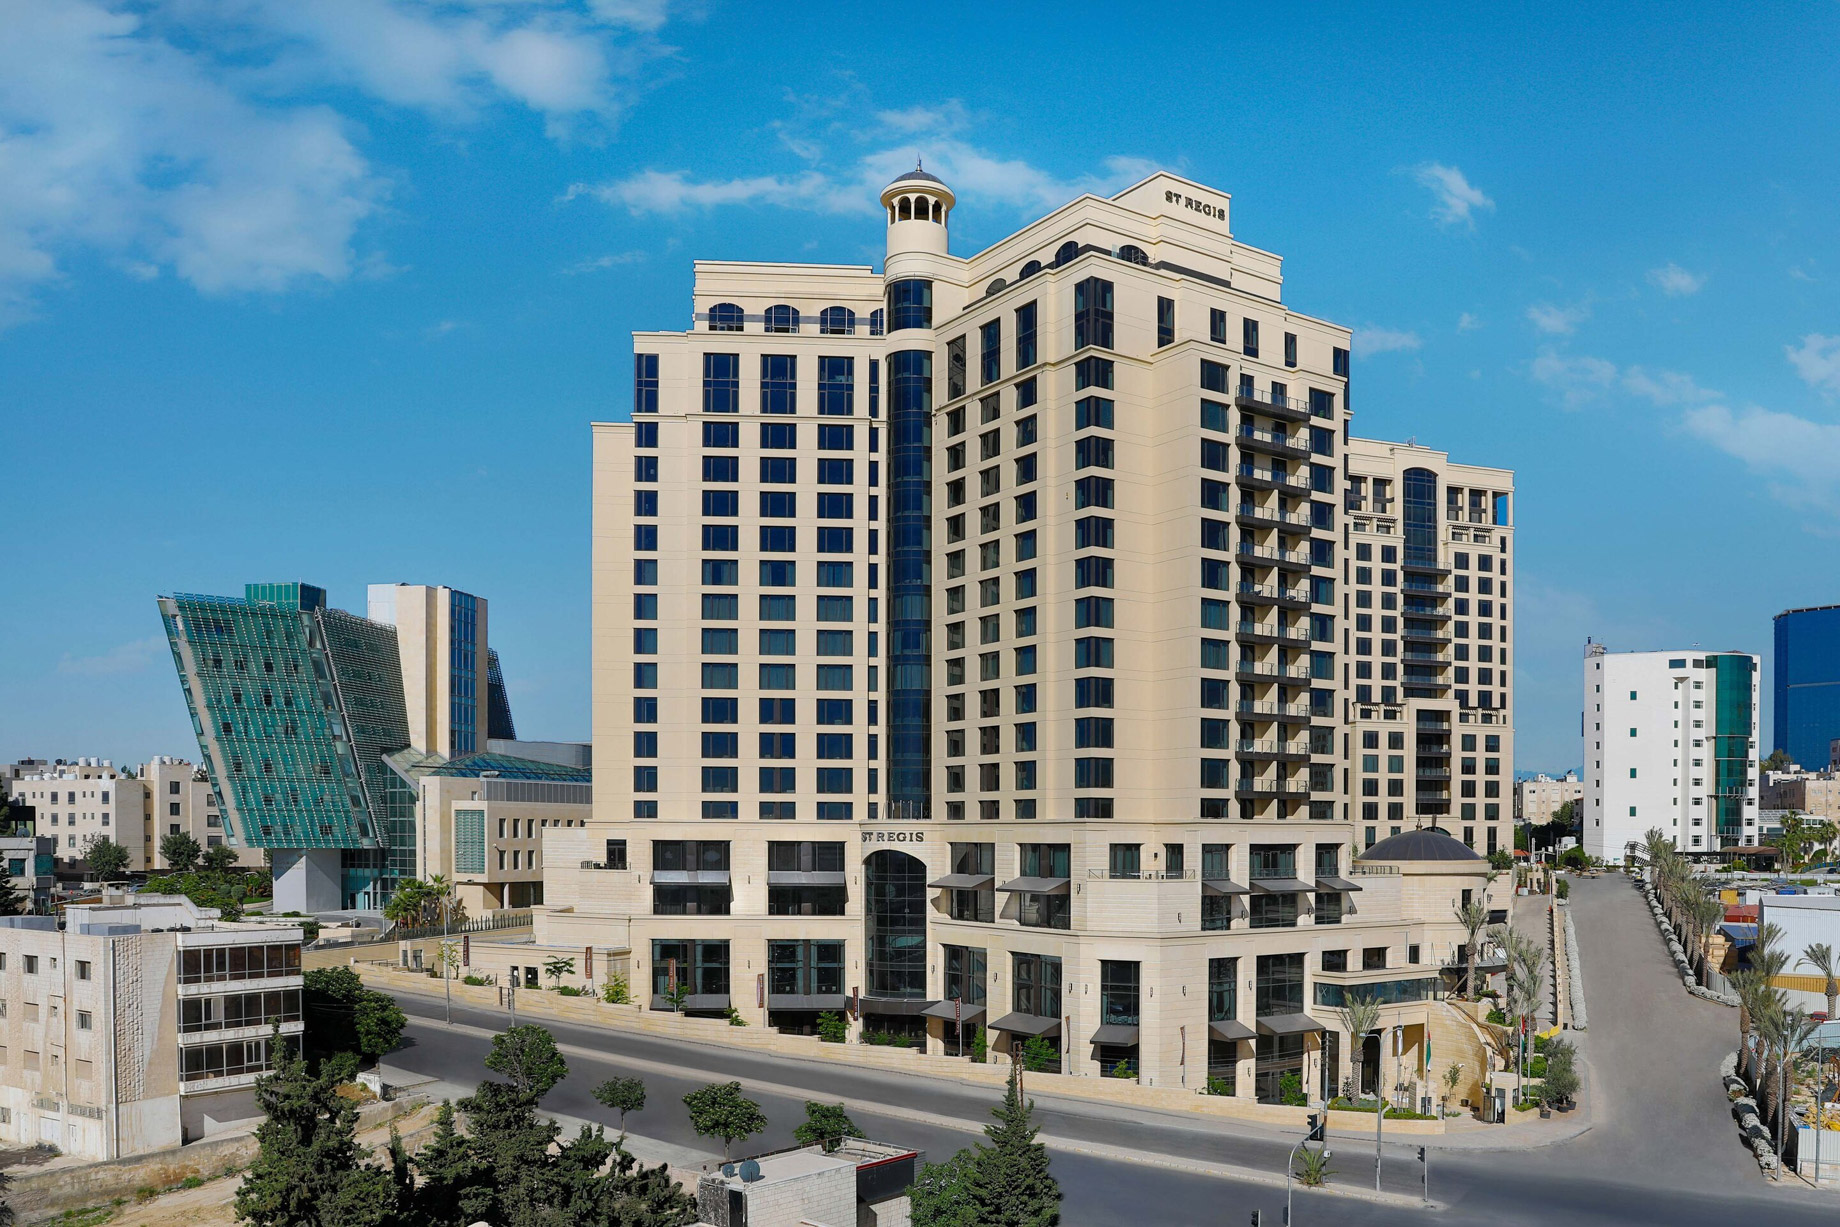 The St. Regis Amman Luxury Hotel – Amman, Jordan – Hotel Exterior Day